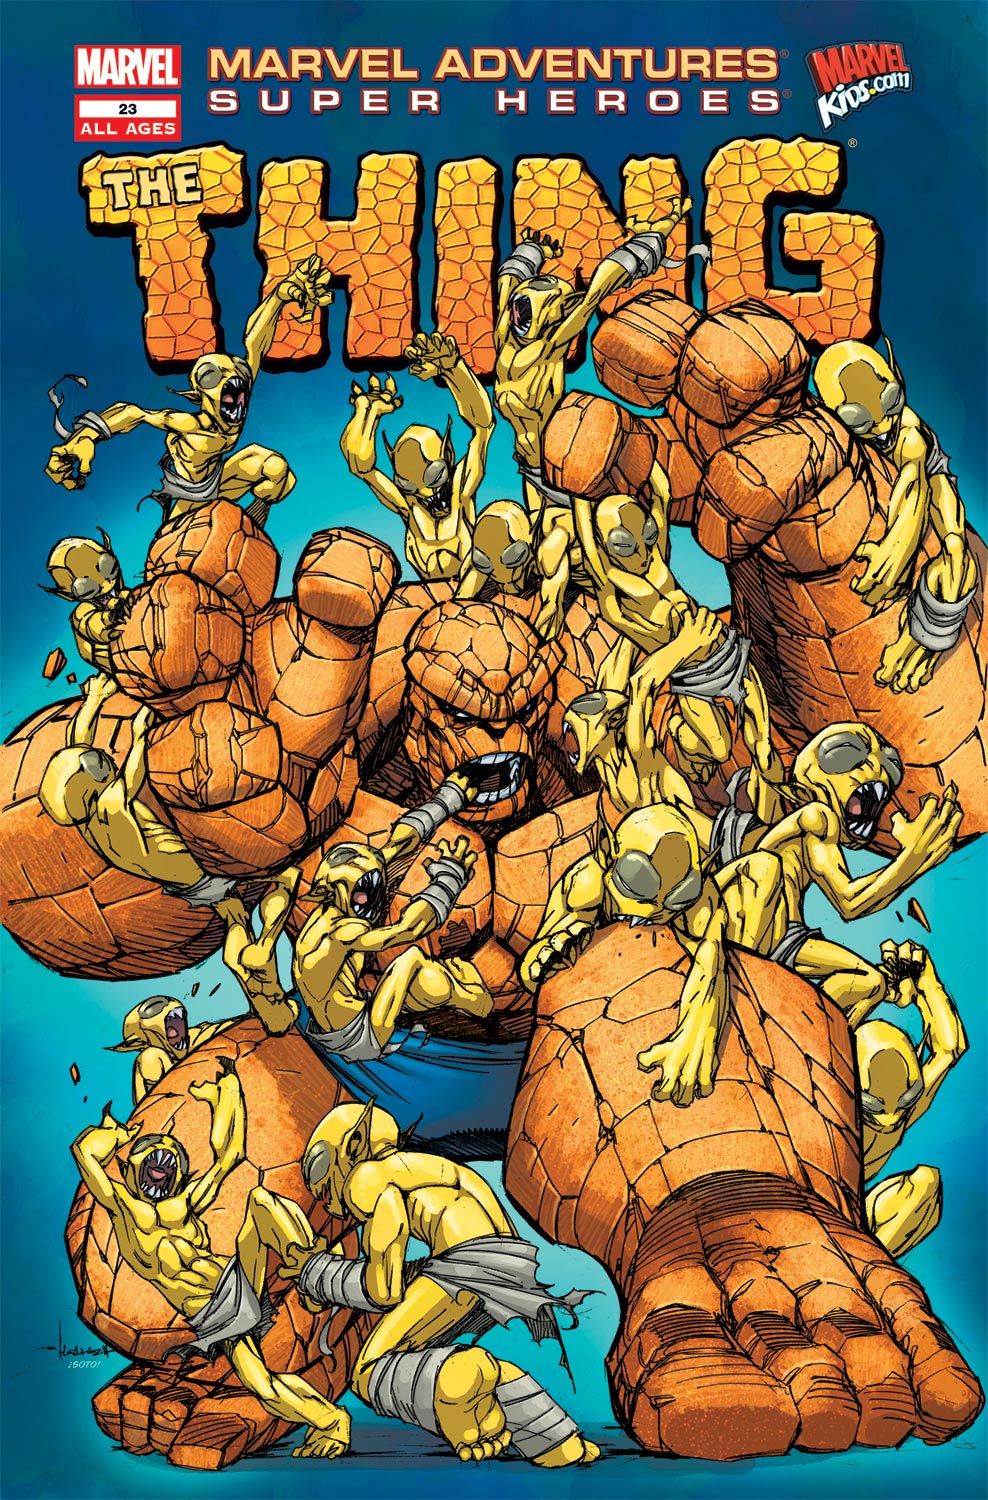 Marvel Adventures Super Heroes (2010) #23